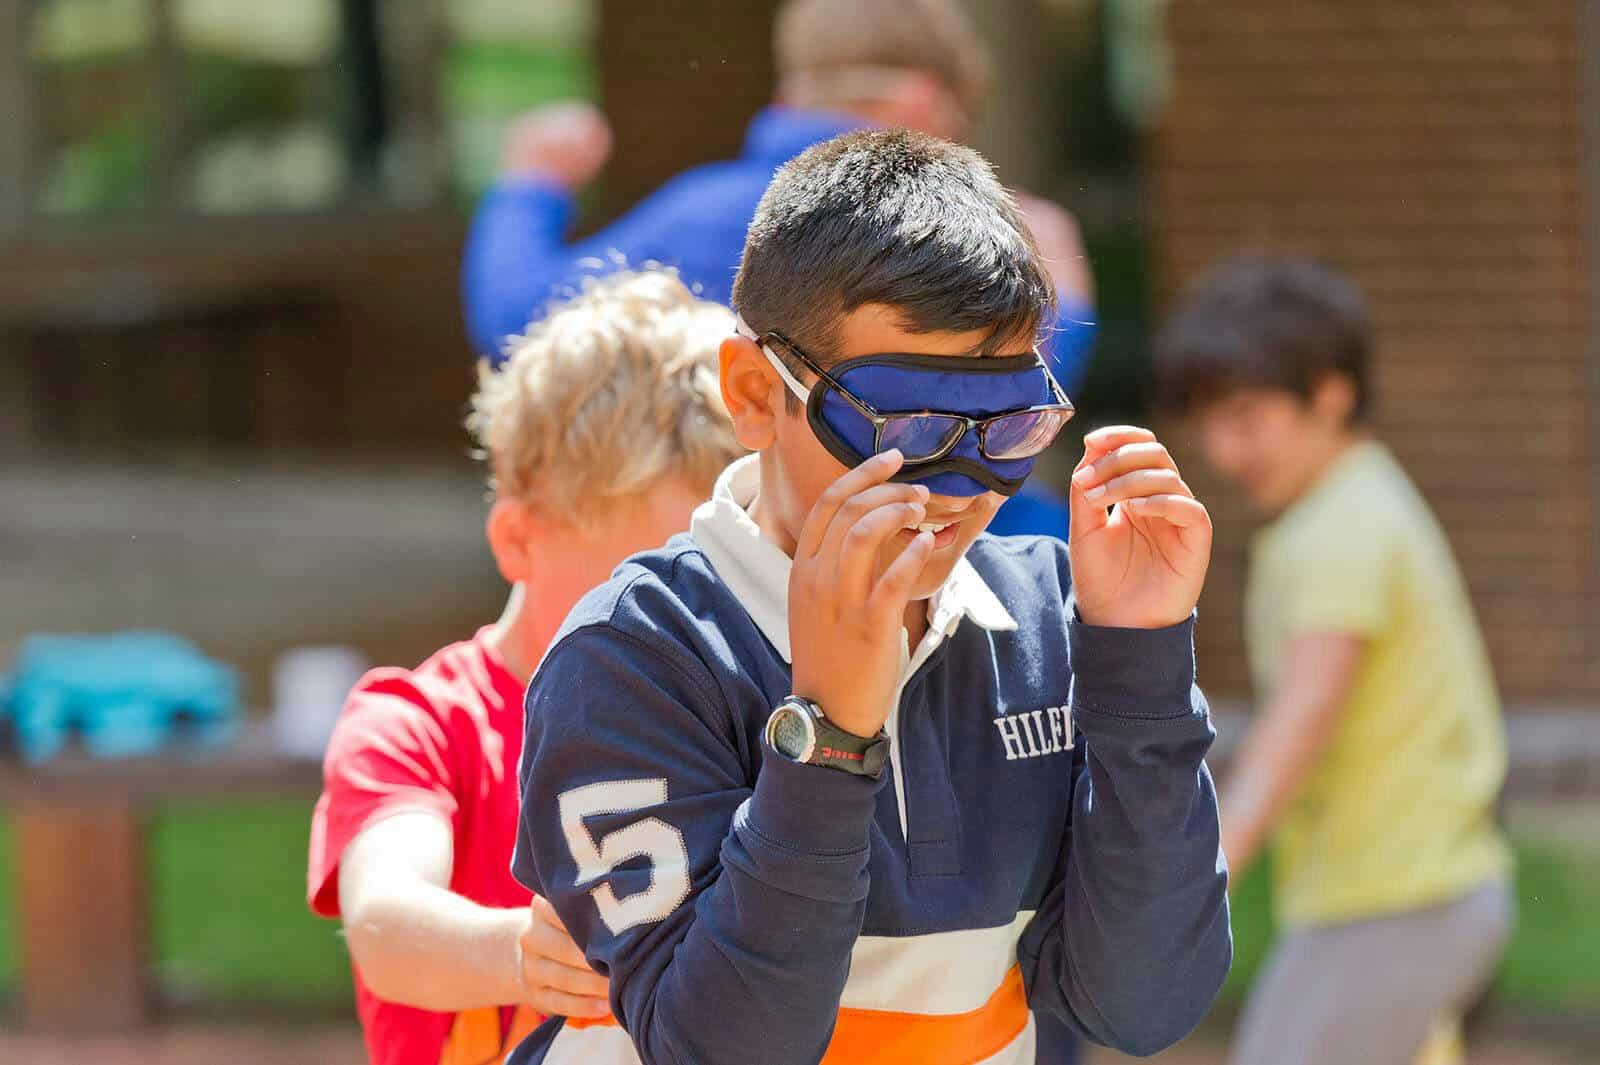 Child wearing mask playing trust game.